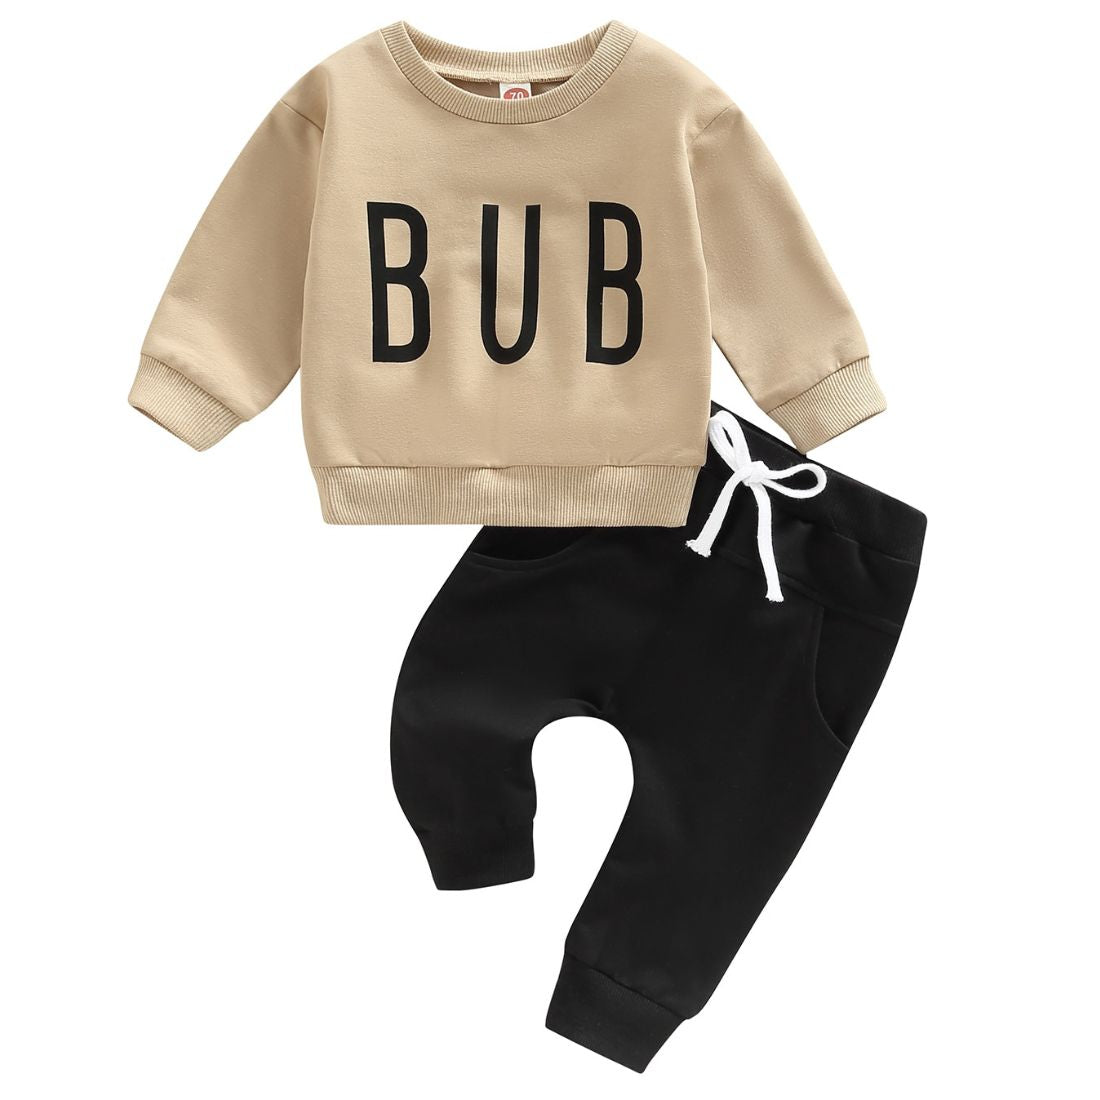 Bub Lettered Sweaty Baby Boy Clothing Set